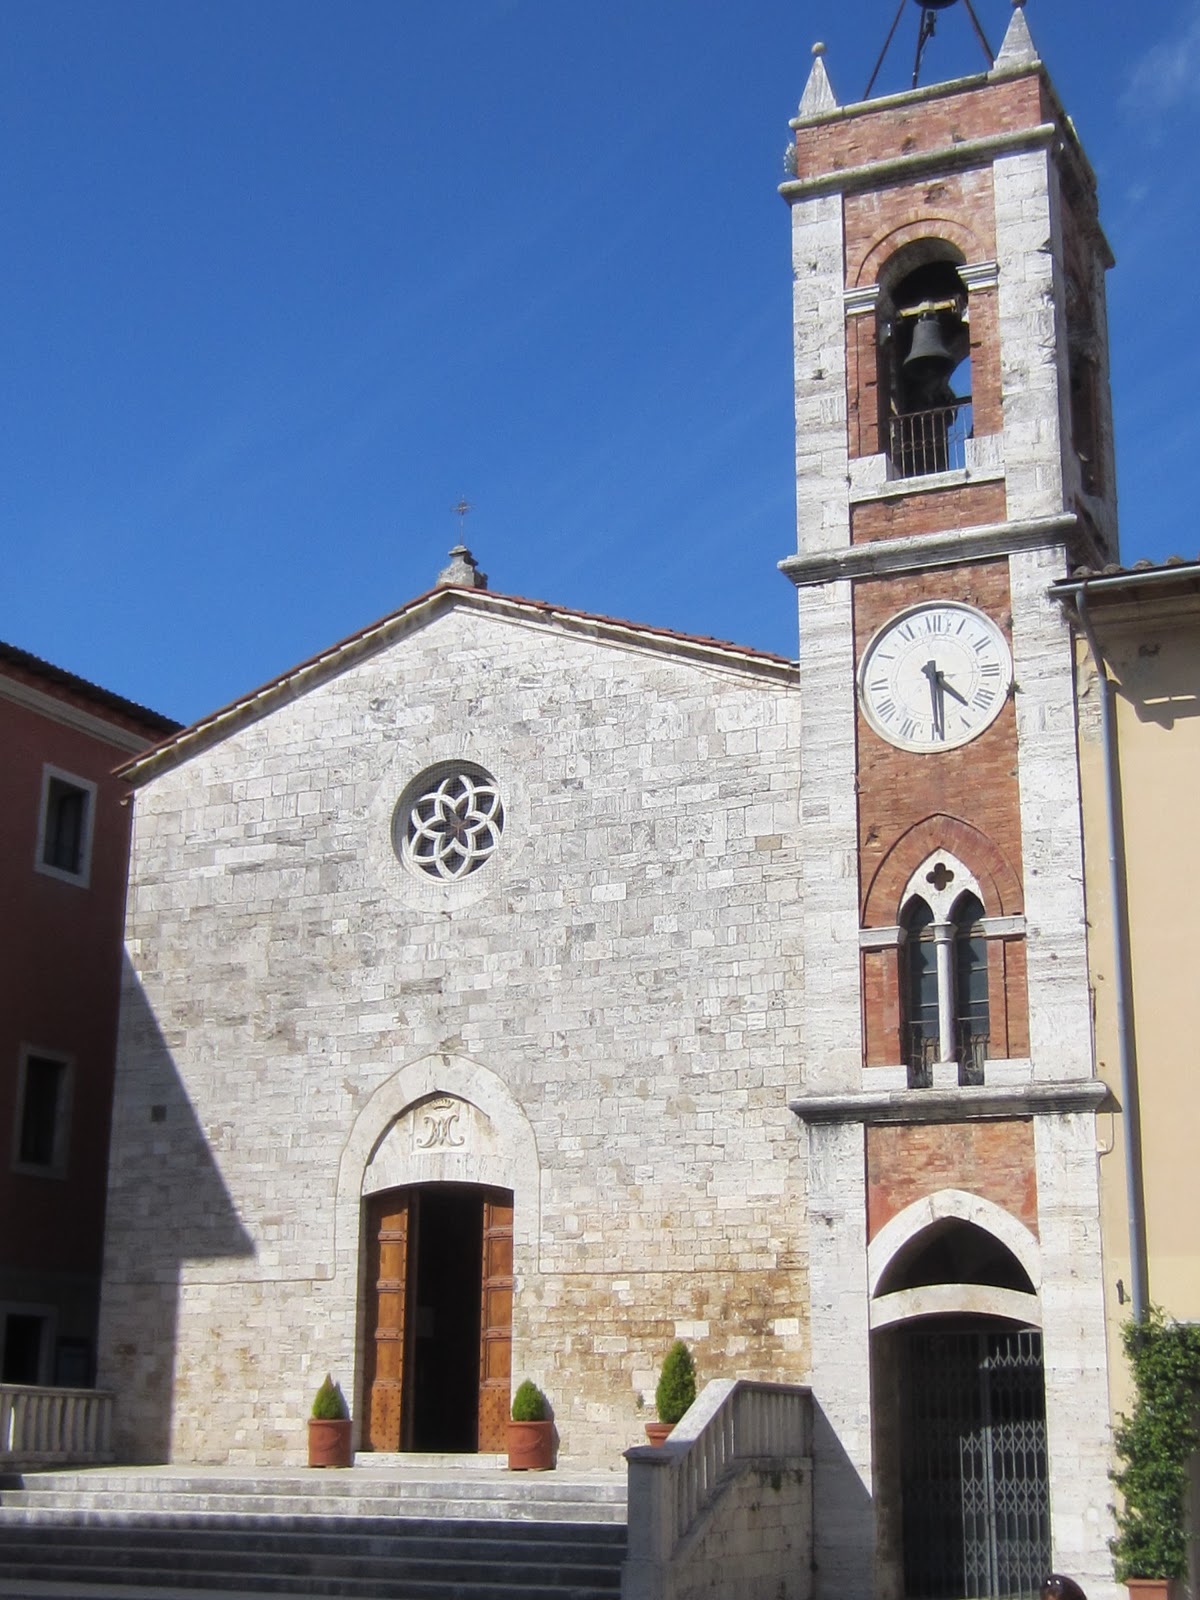 Our Italian Adventure: San Quirico d' Orcia